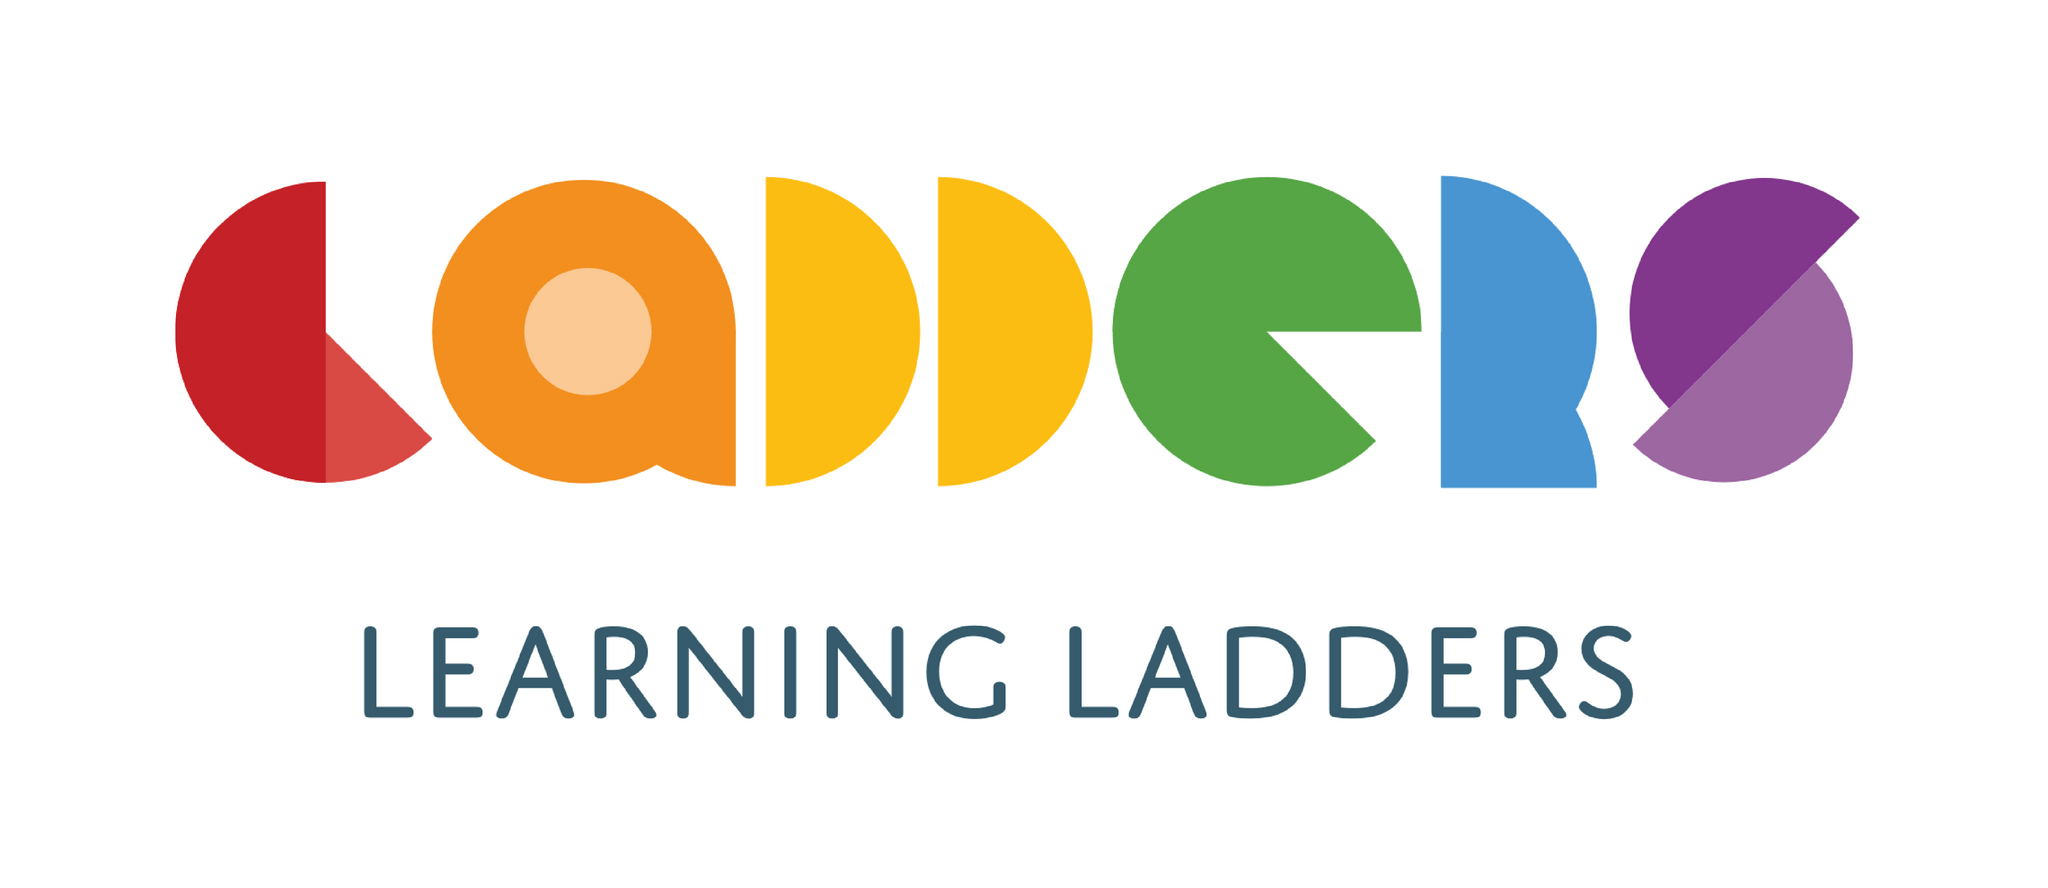 Learning Ladders parental engagement app